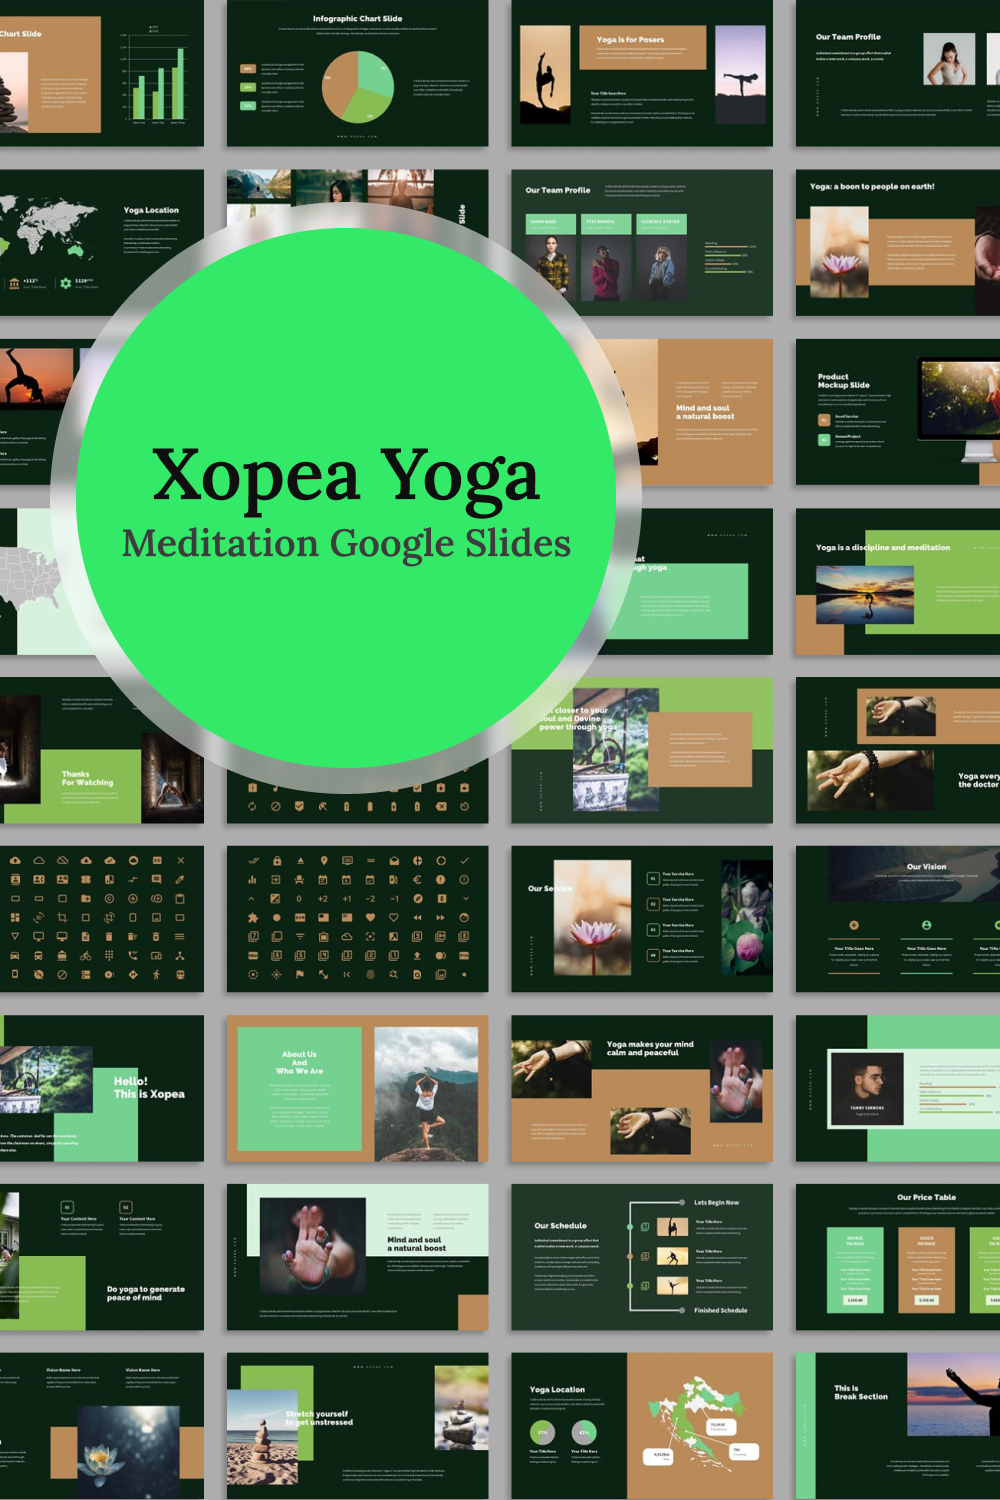 Xopea yoga meditation google slides of pinterest.